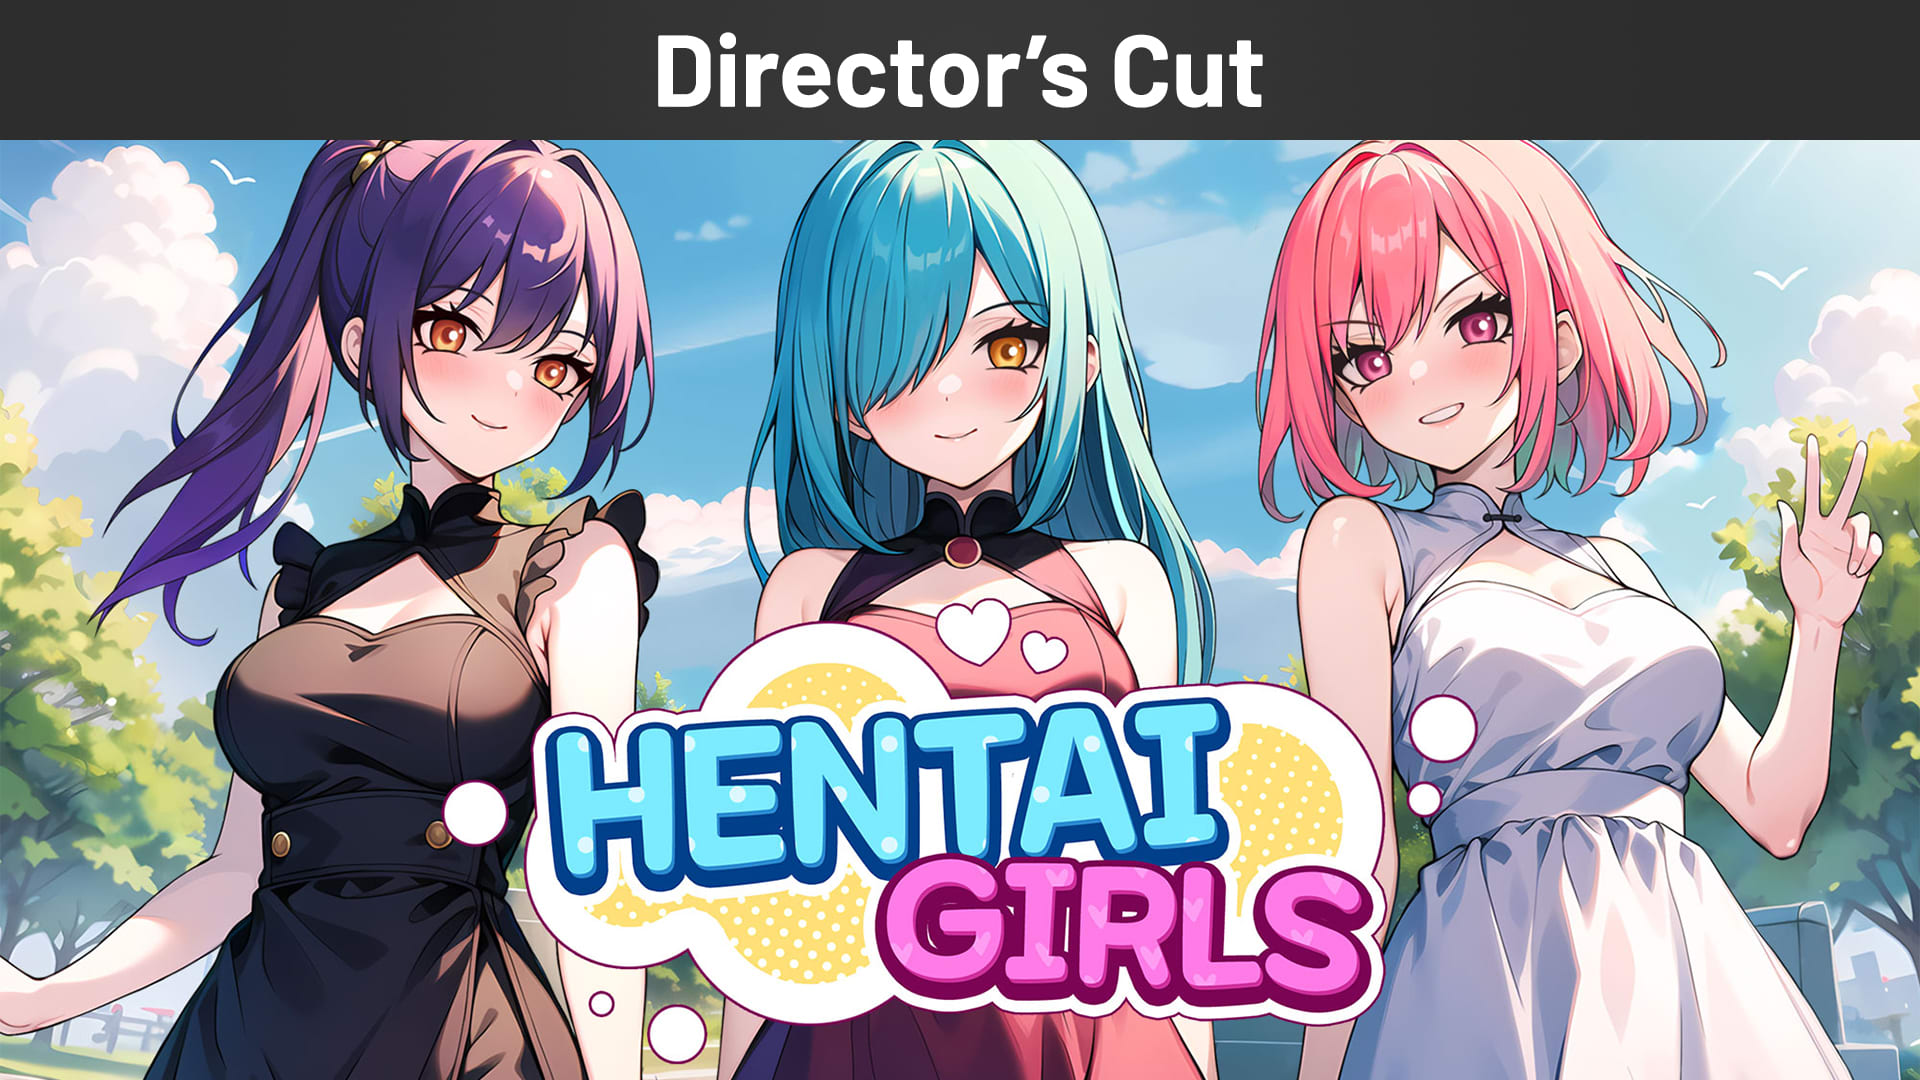 Hentai Girls Director's Cut